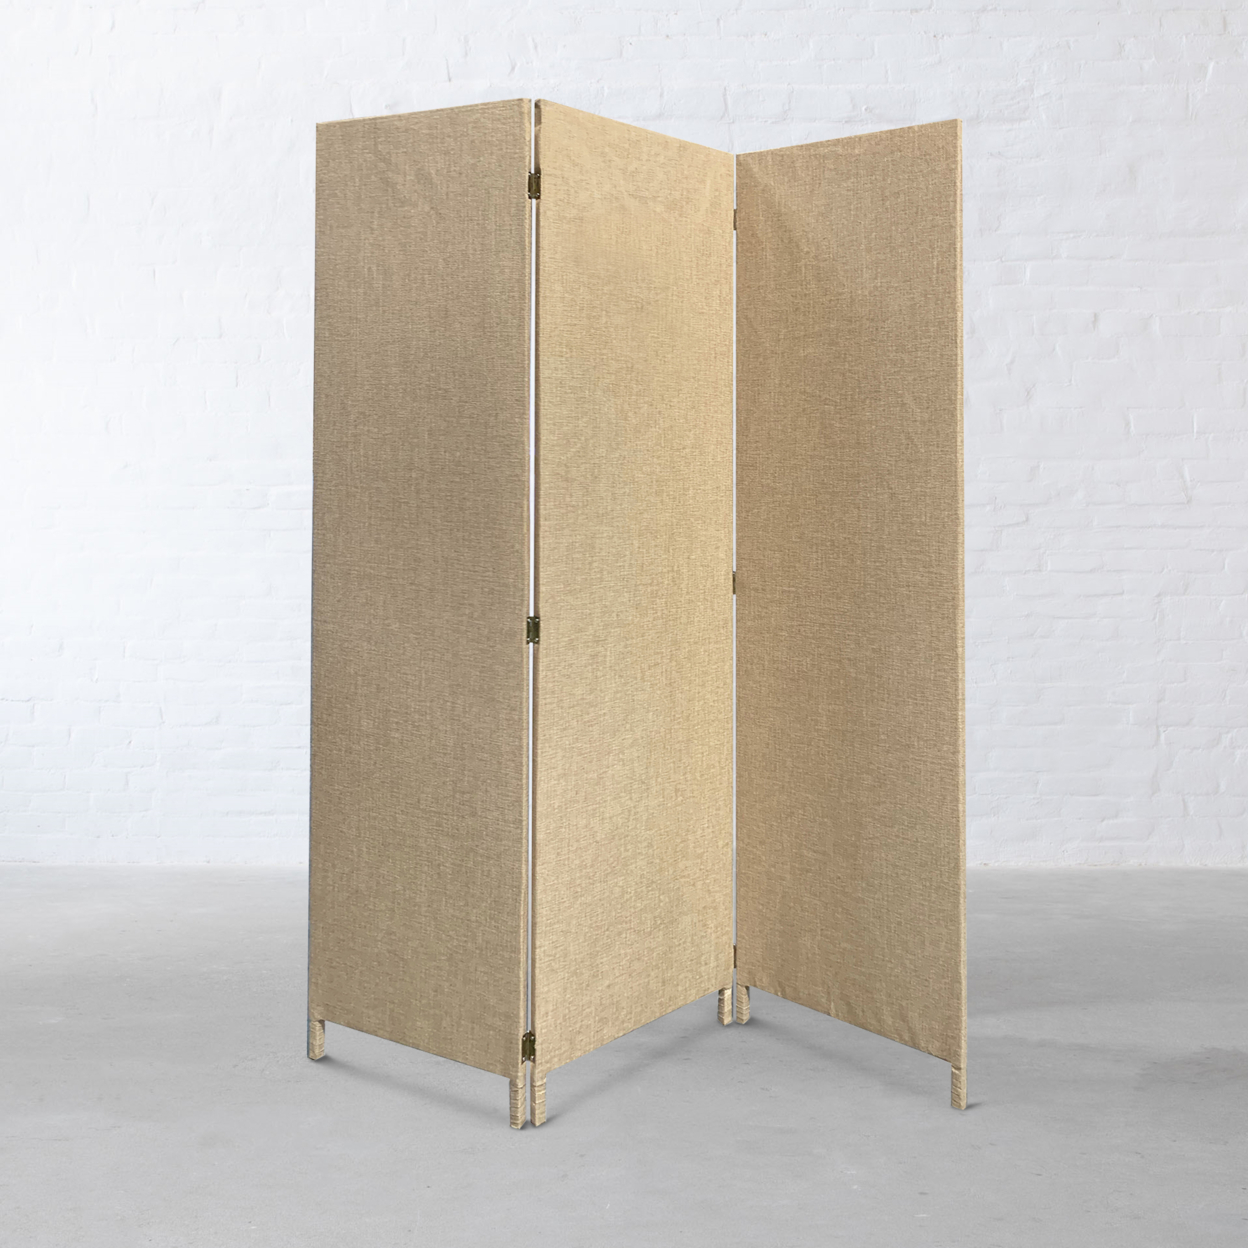 3 Panel Fabric Upholstered Wooden Screen With Straight Legs, Beige- Saltoro Sherpi